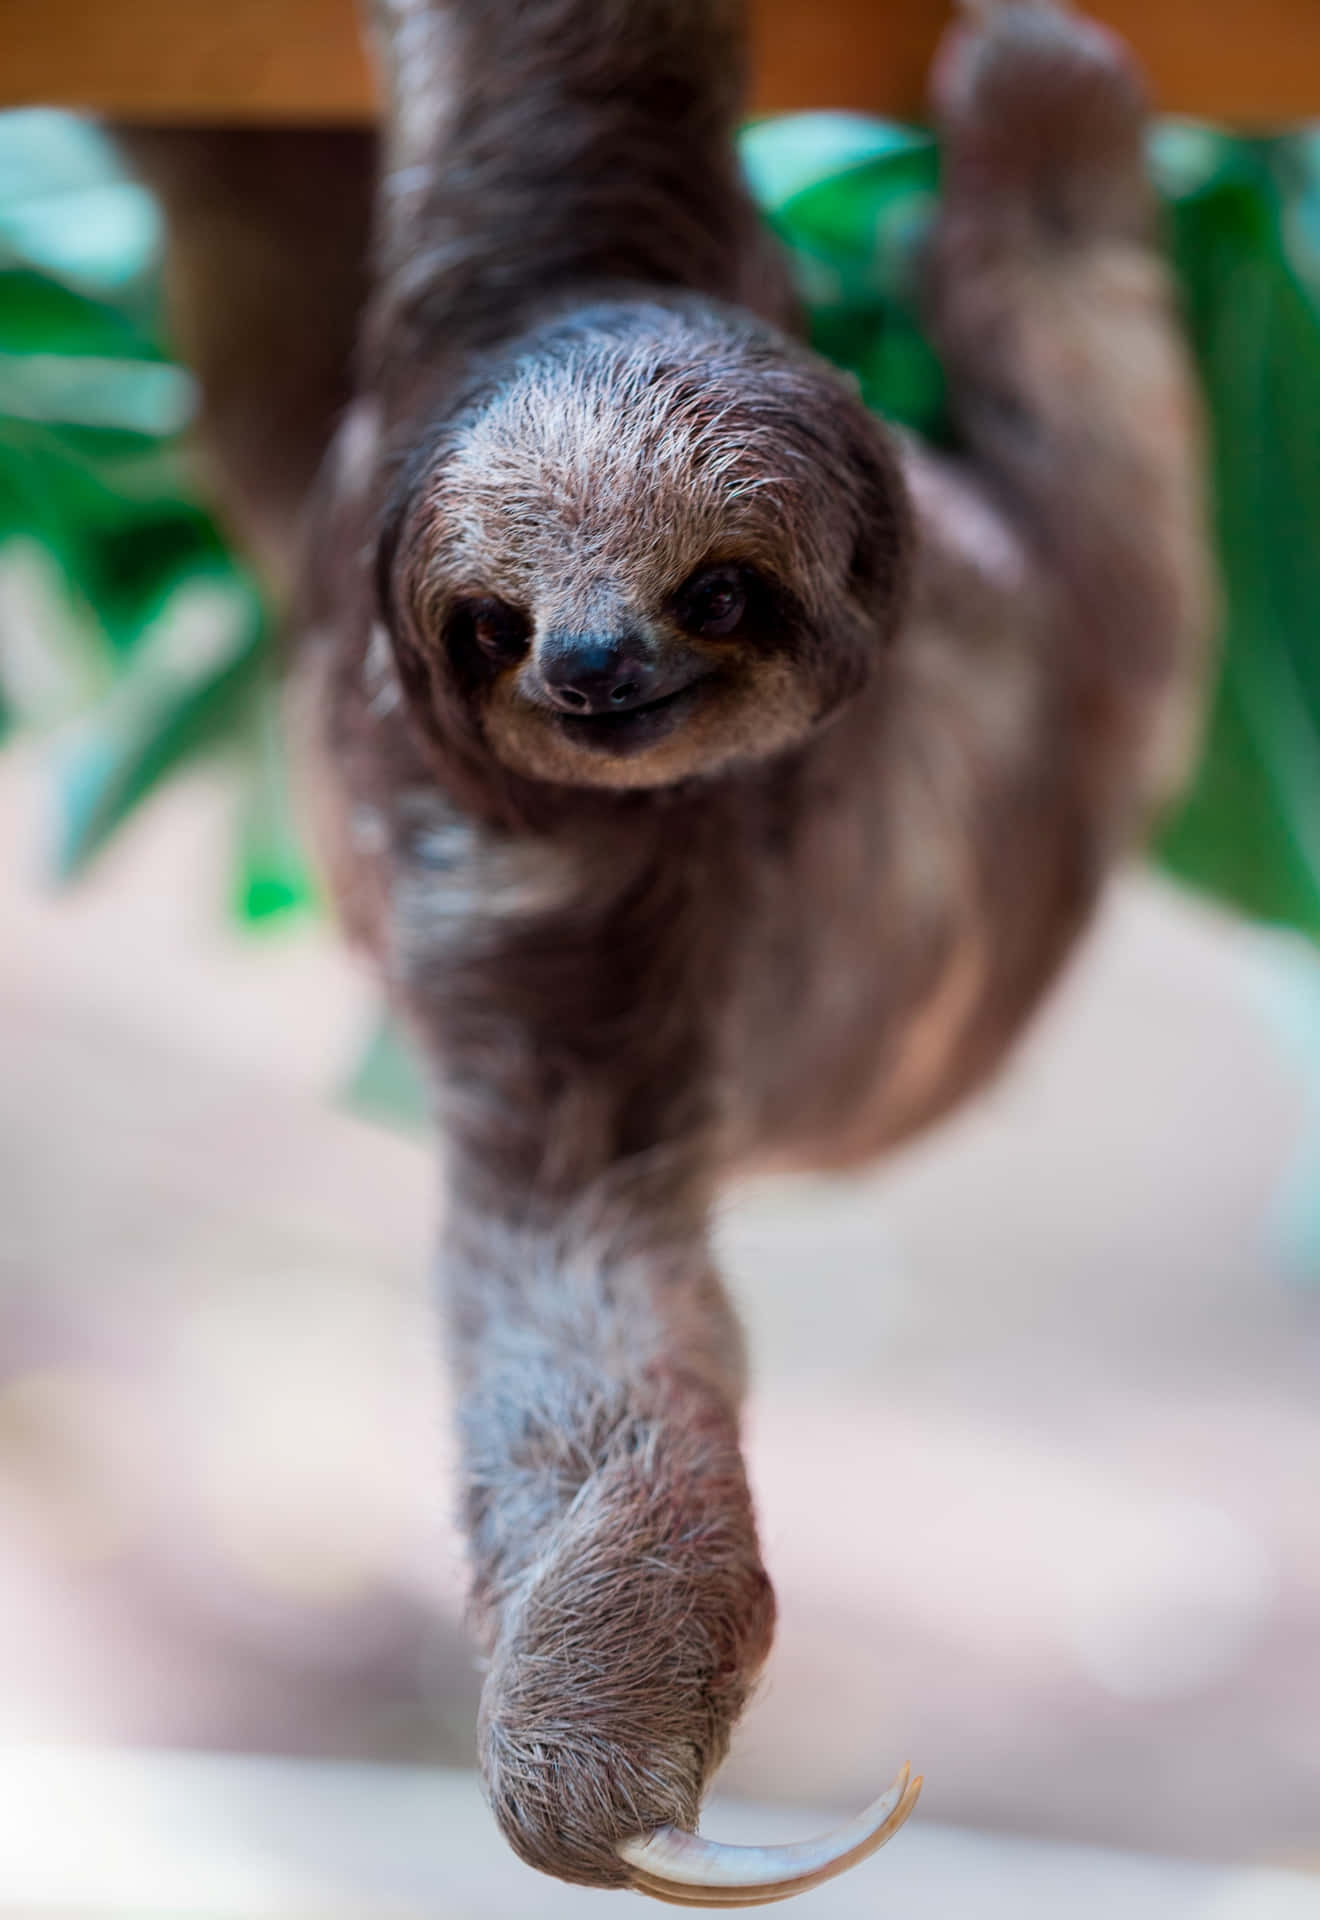 Cute Sloth Blurred Portrait Picture